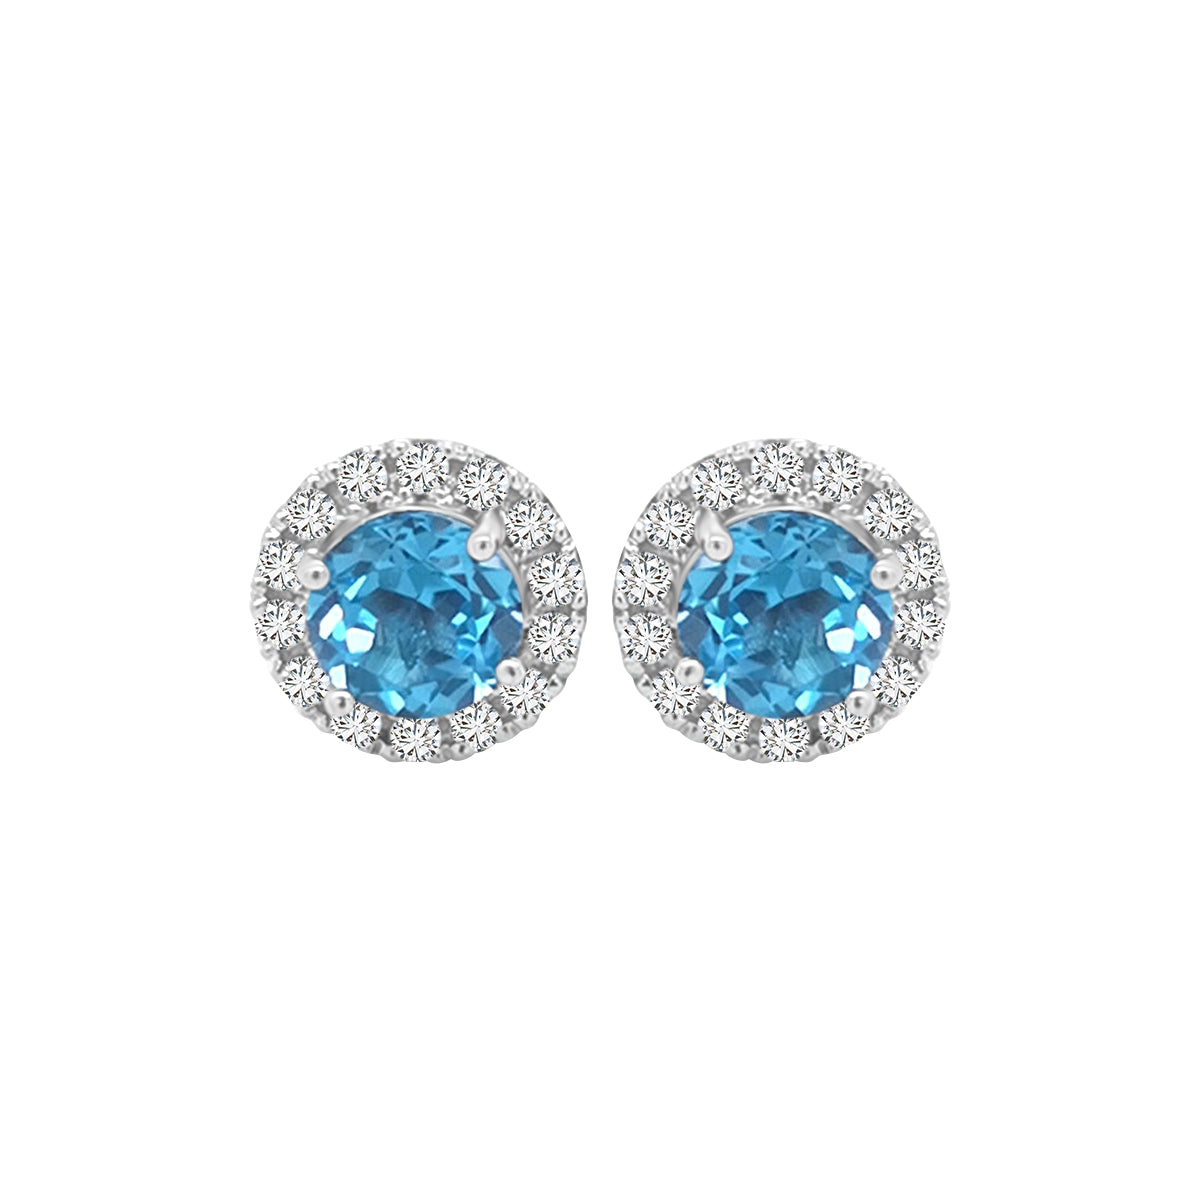 Blue Topaz And Diamond Halo Stud Earrings In 18k White Gold.